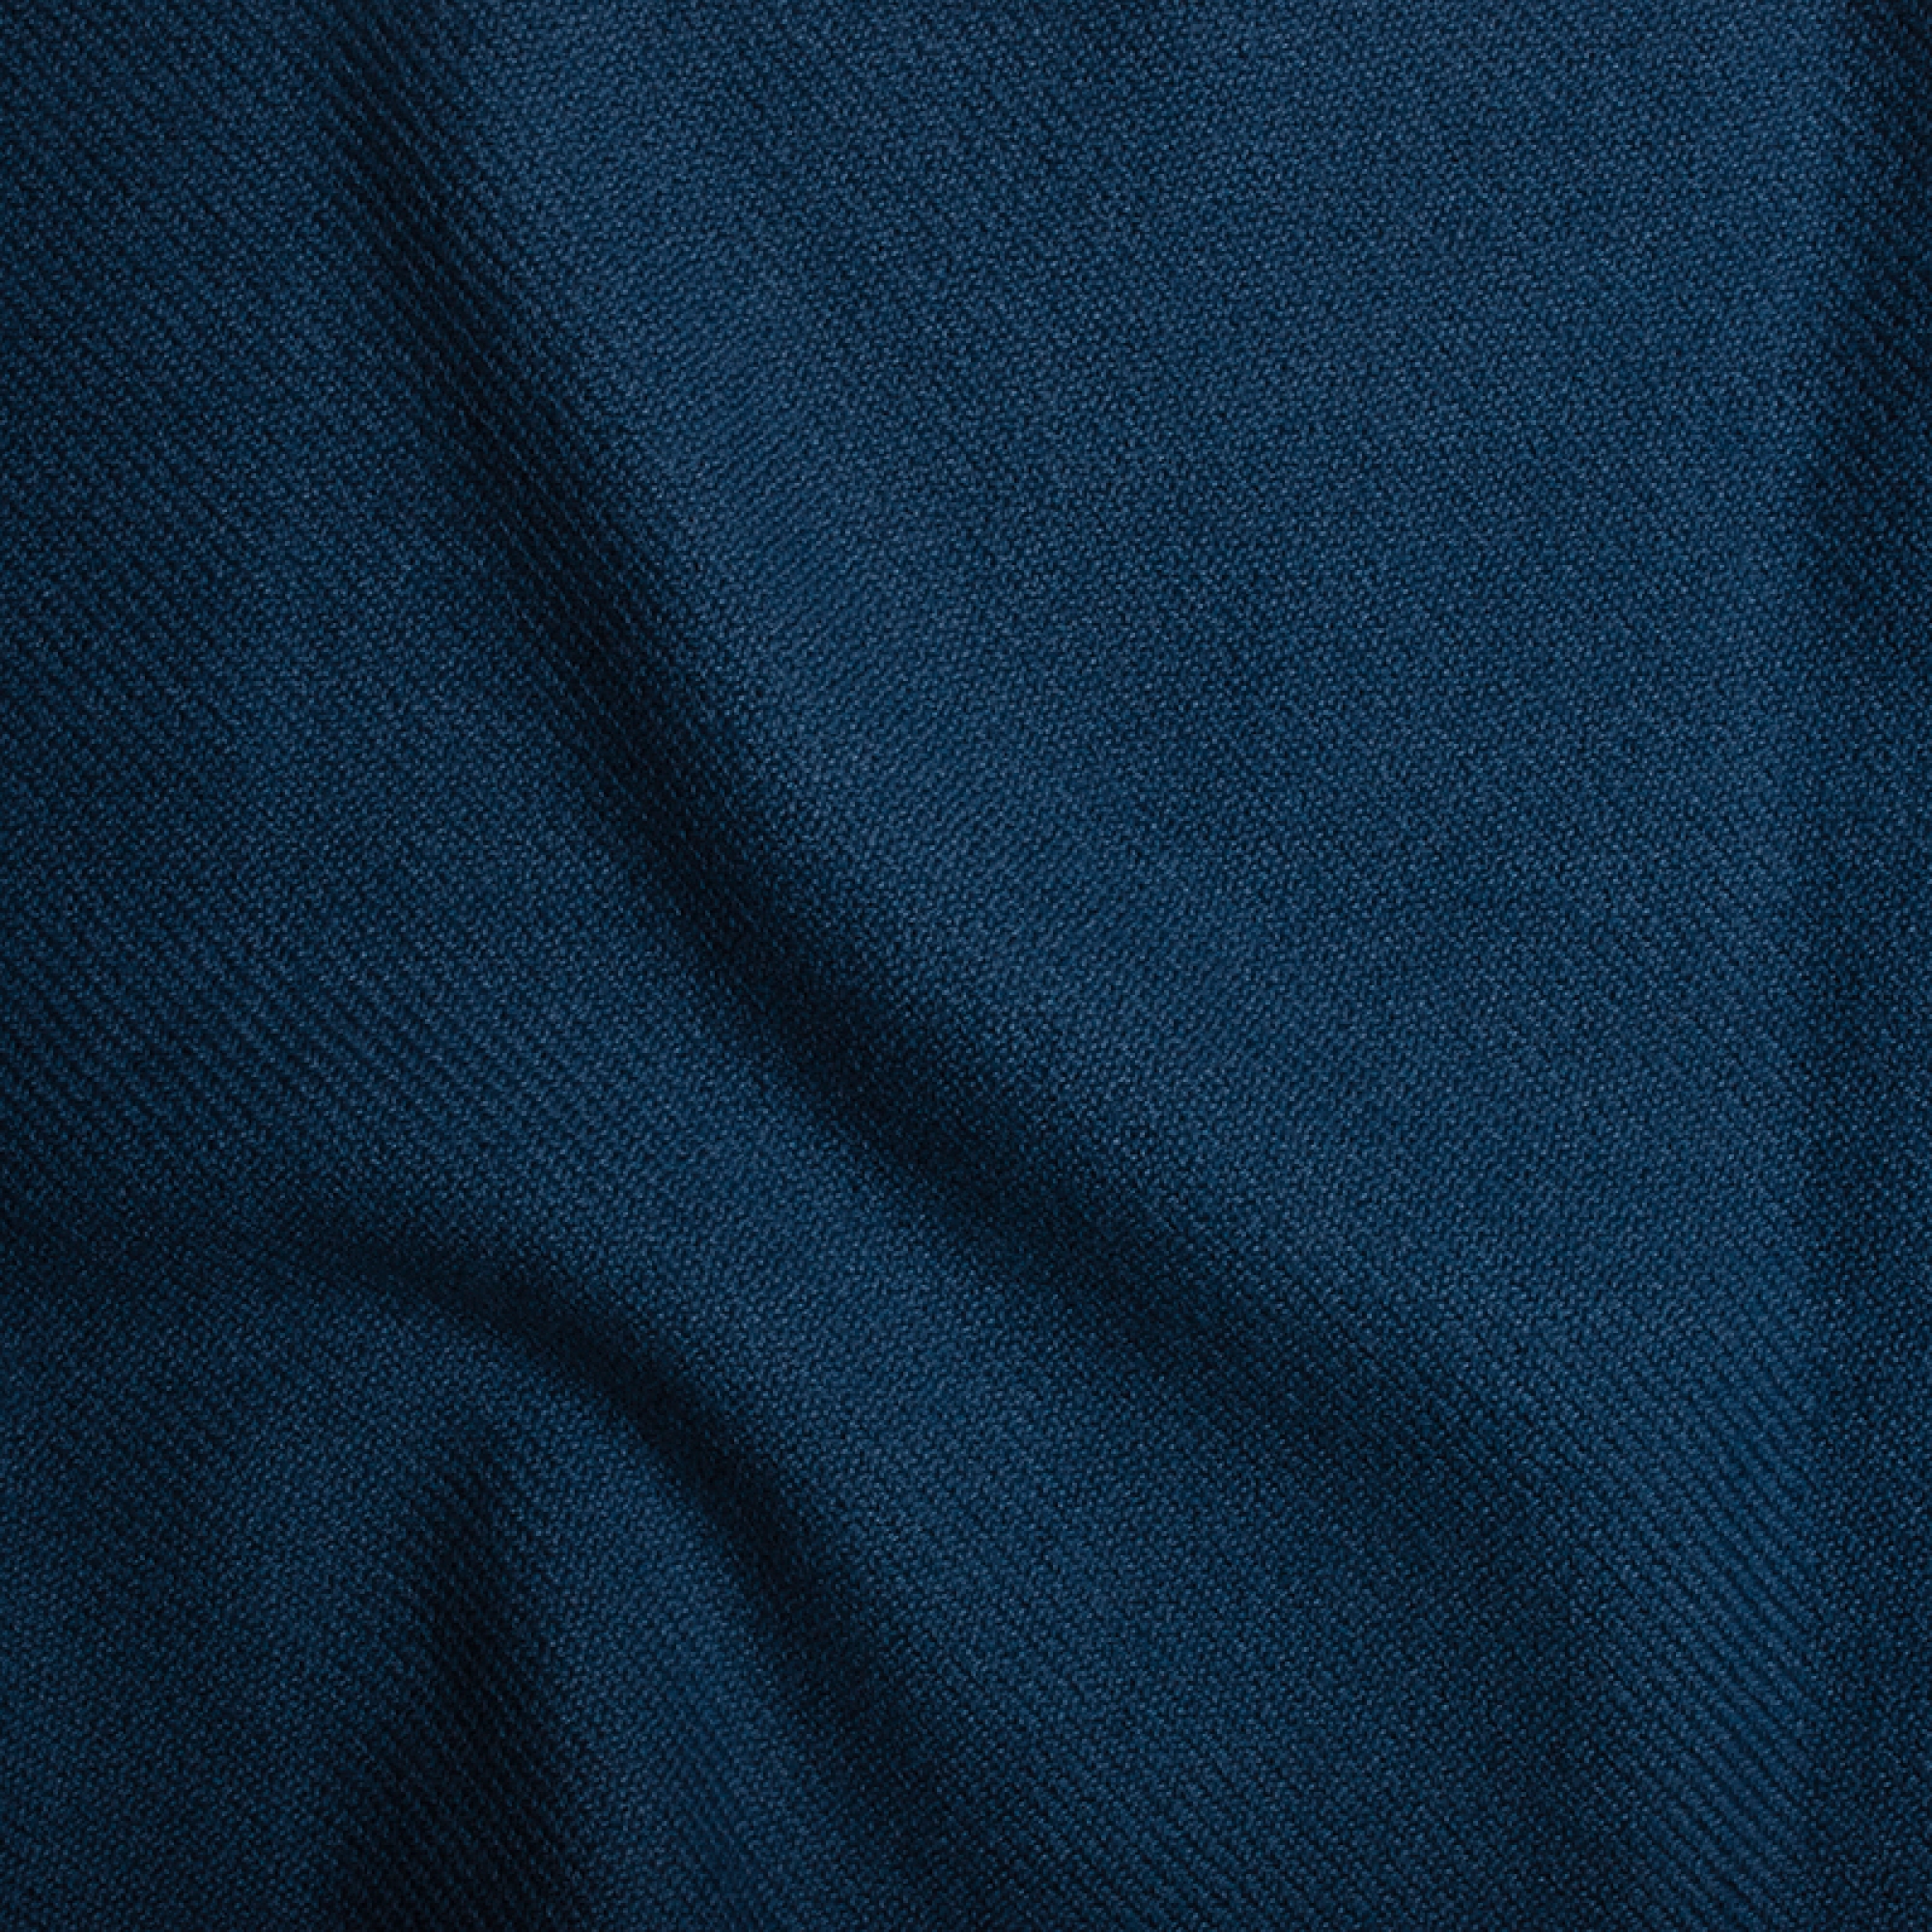 Cashmere accessories cocooning toodoo plain l 220 x 220 dark blue 220x220cm